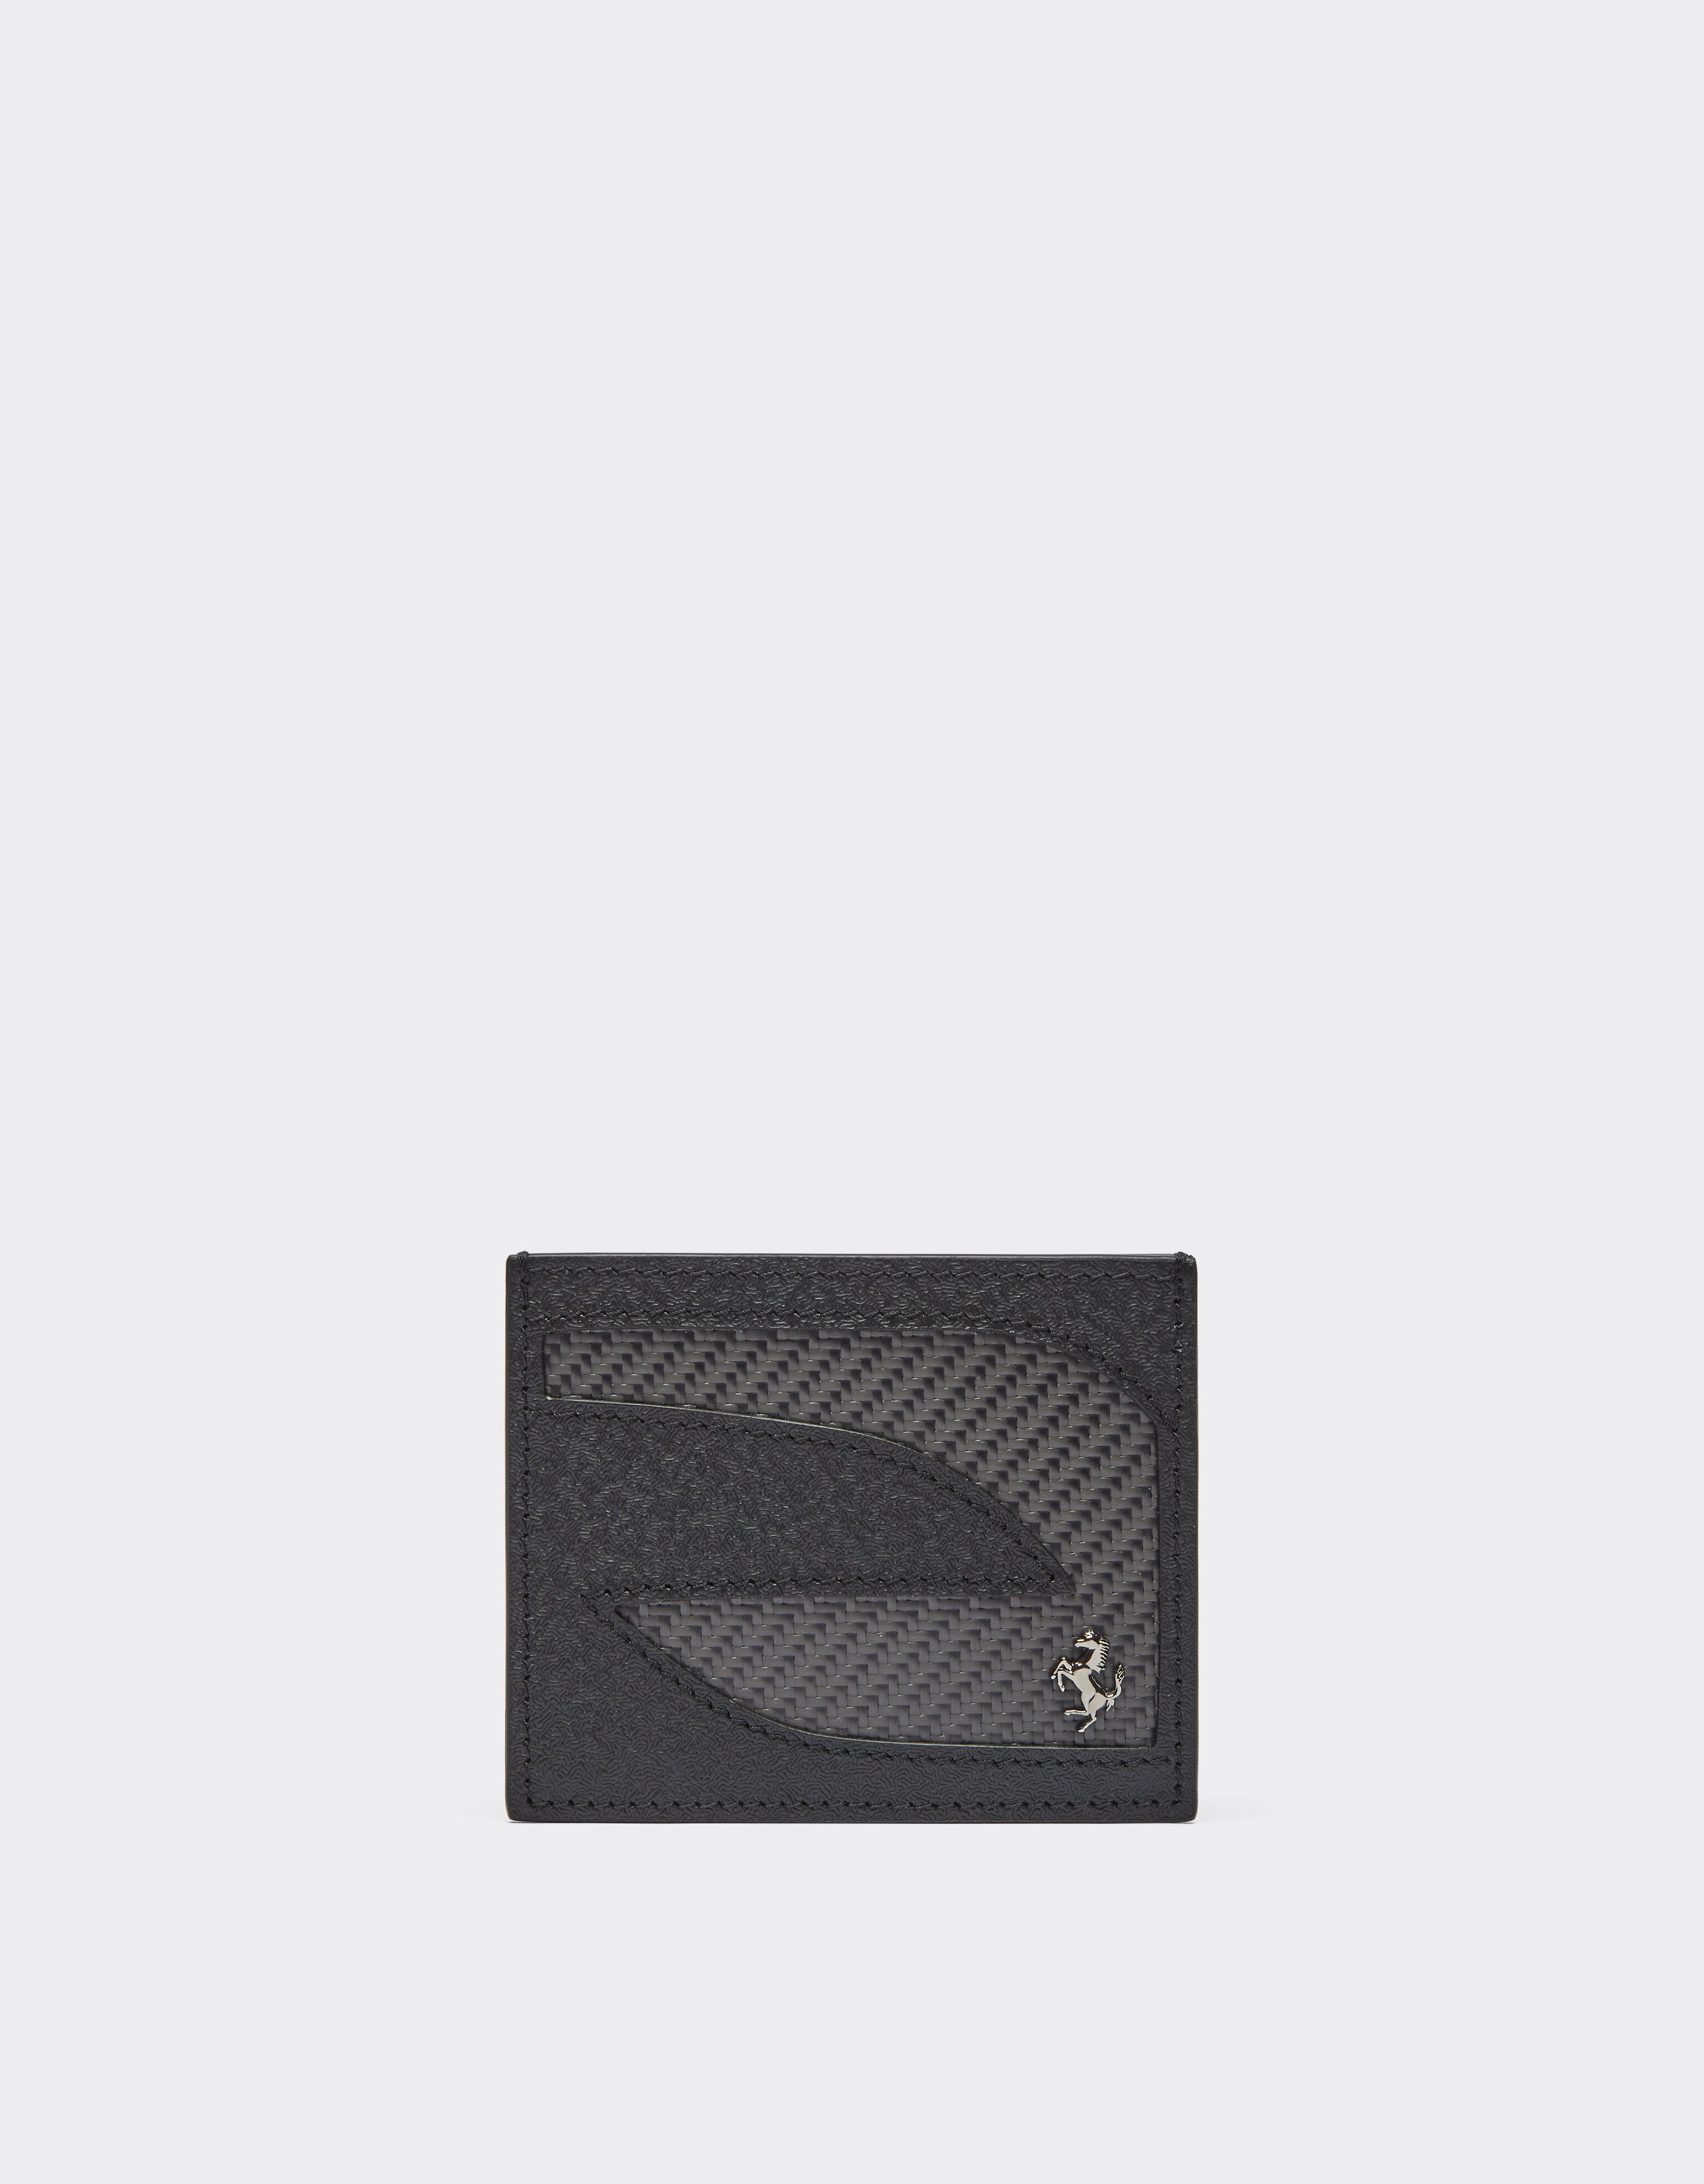 Ferrari Leather cardholder with carbon fibre insert Black 47125f